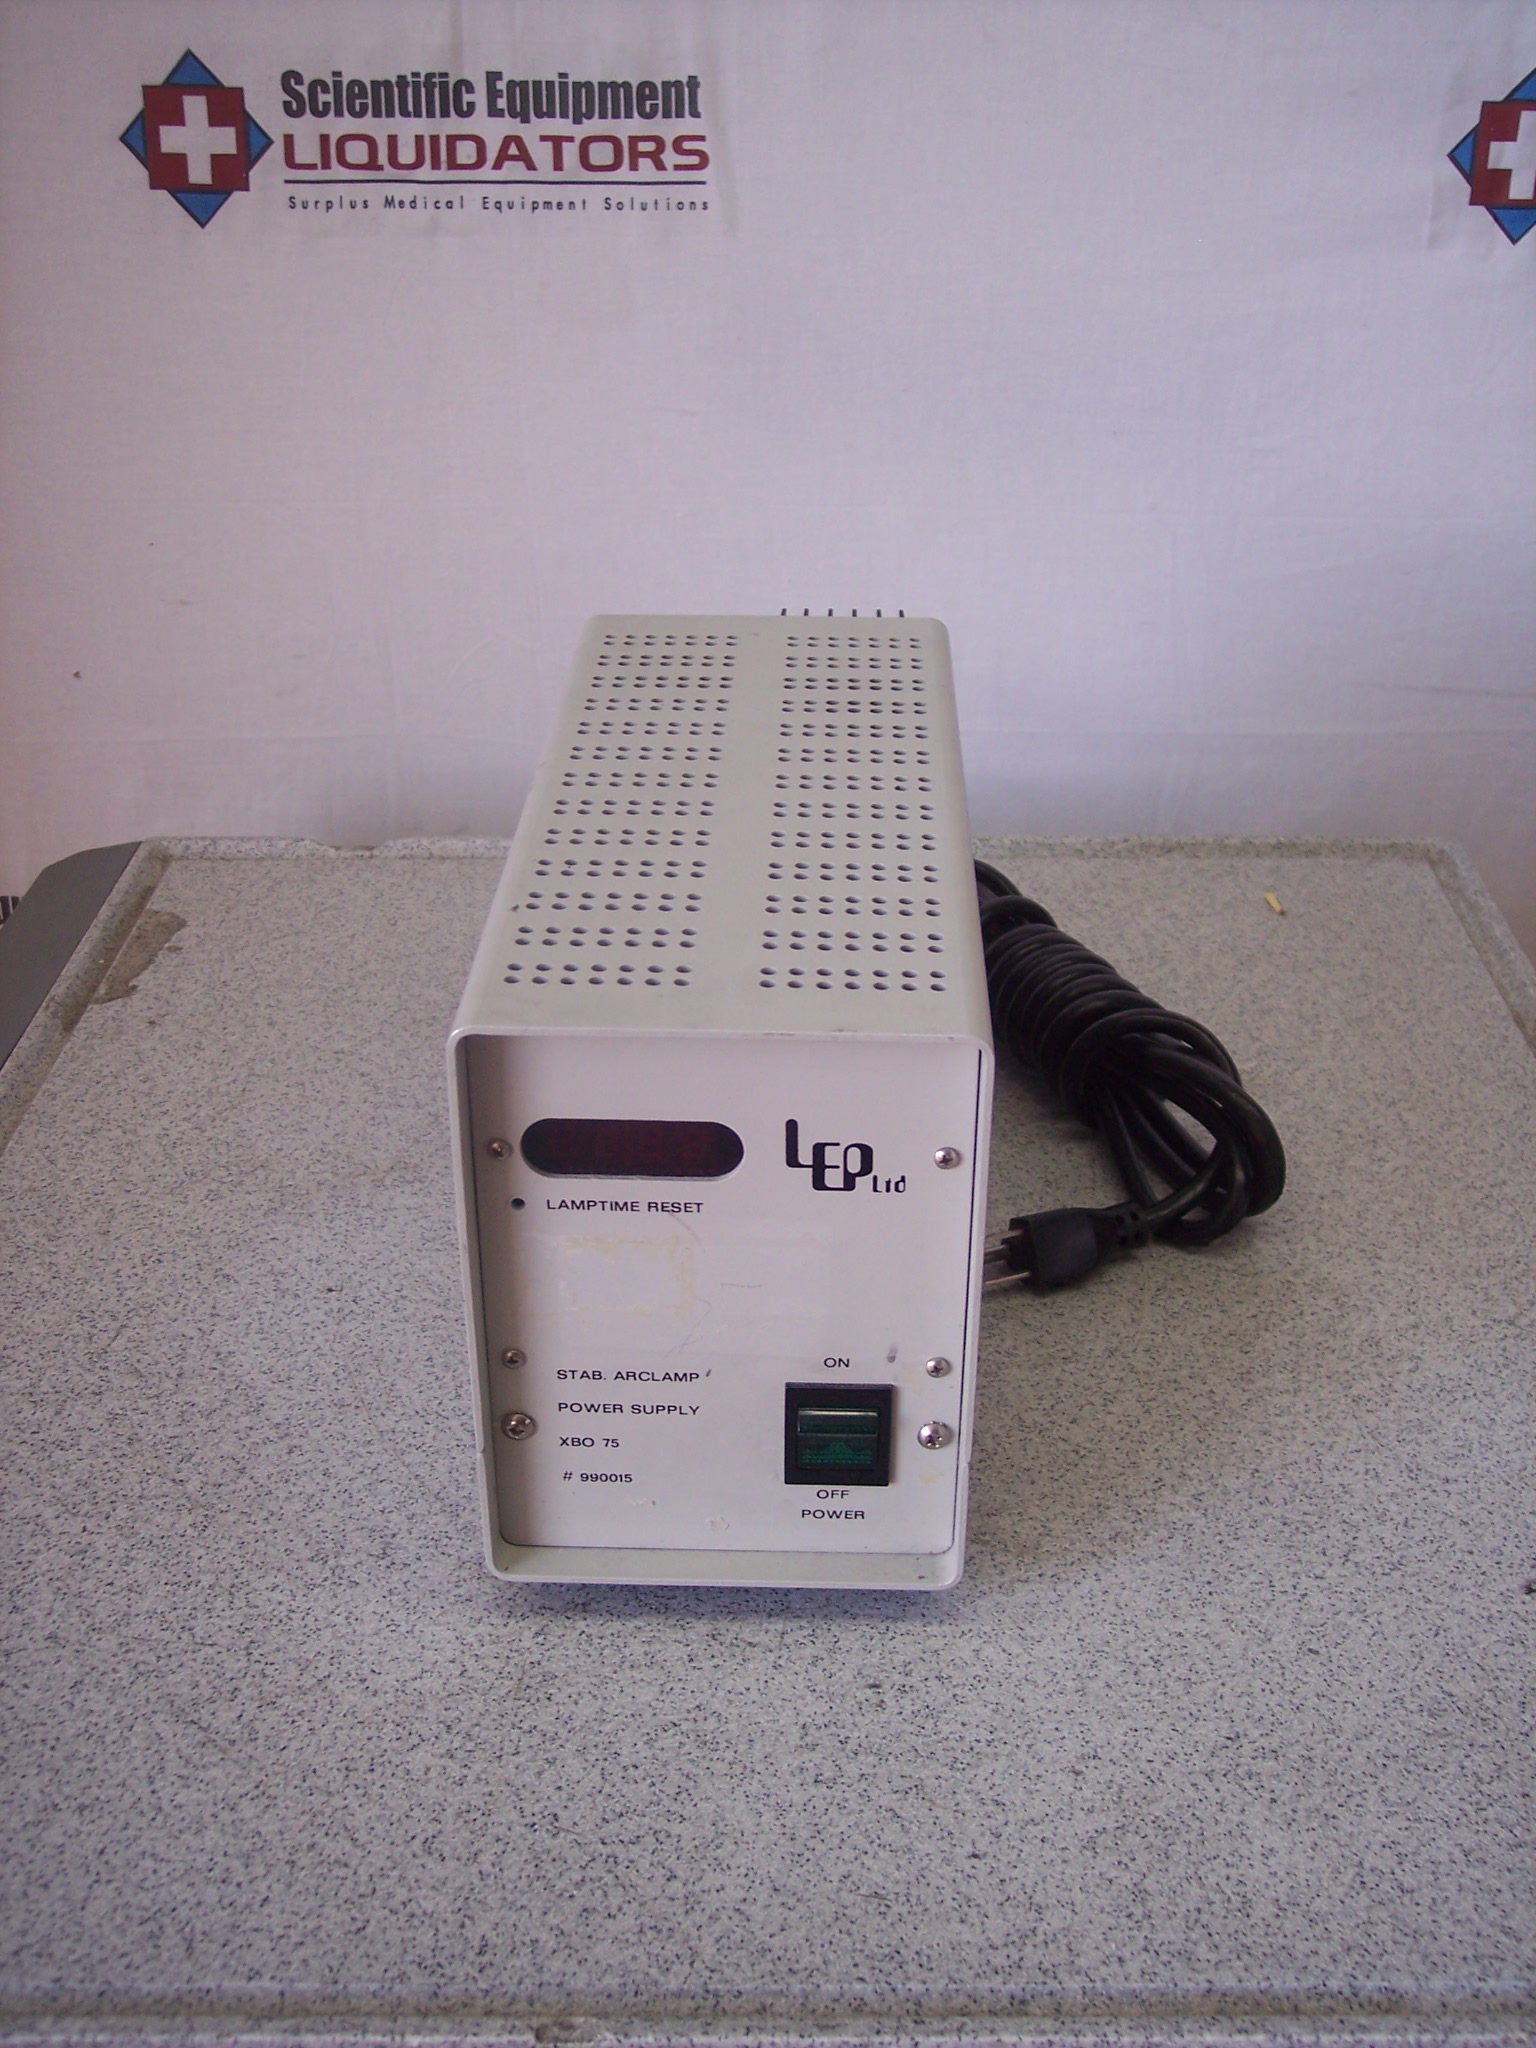 LEP Ltd Arc lamp Power Supply Model 4410